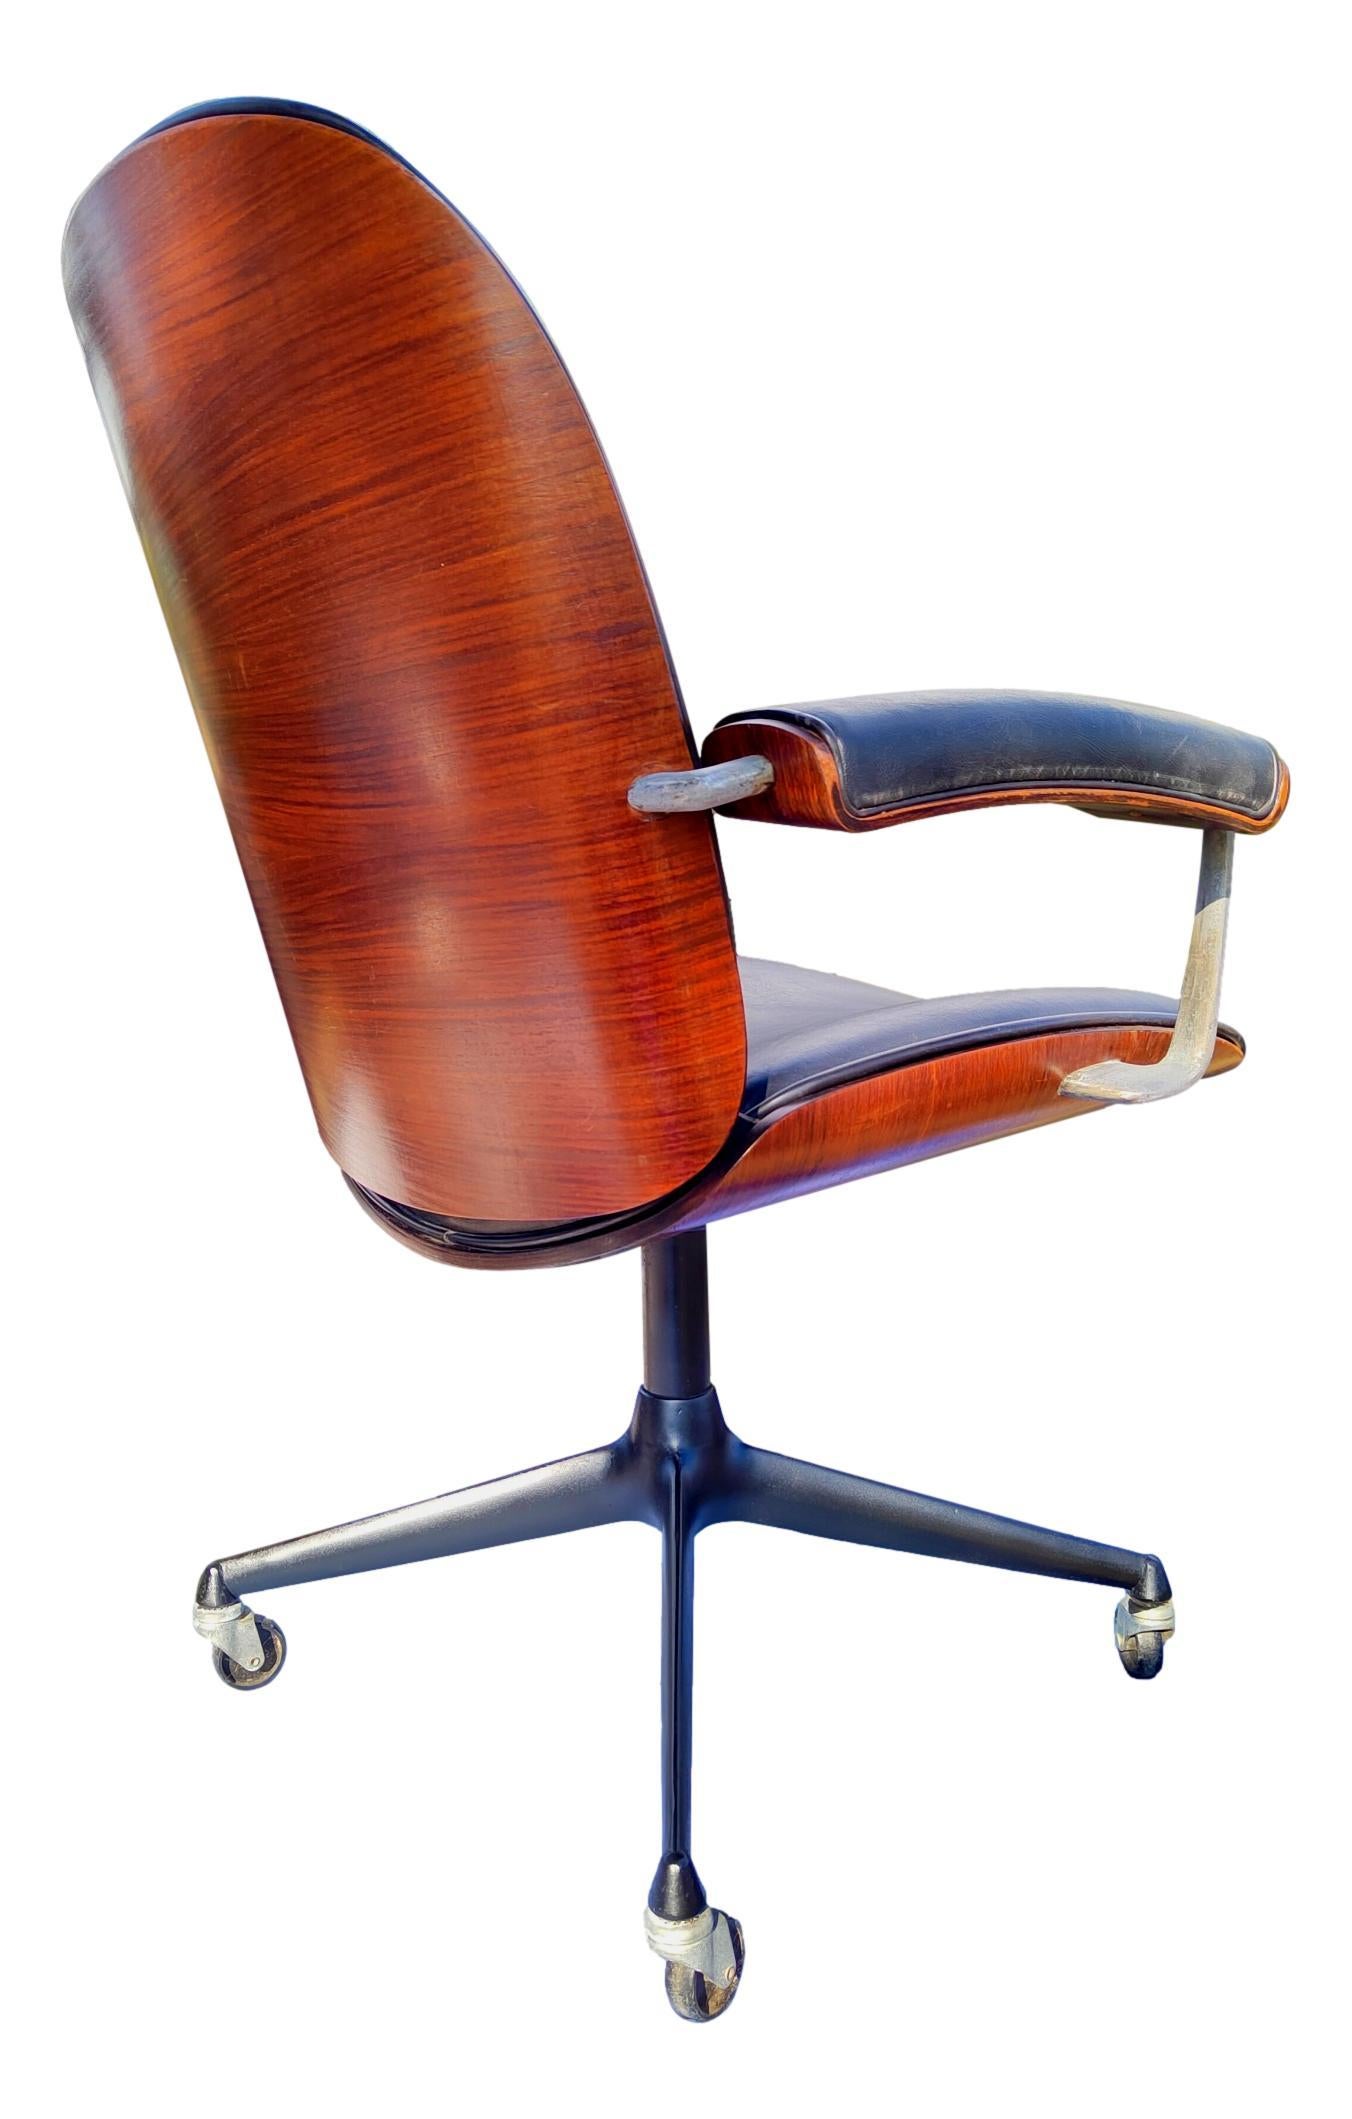 Desk Office Chair Design Ico Parisi for Mim Roma 1960 1